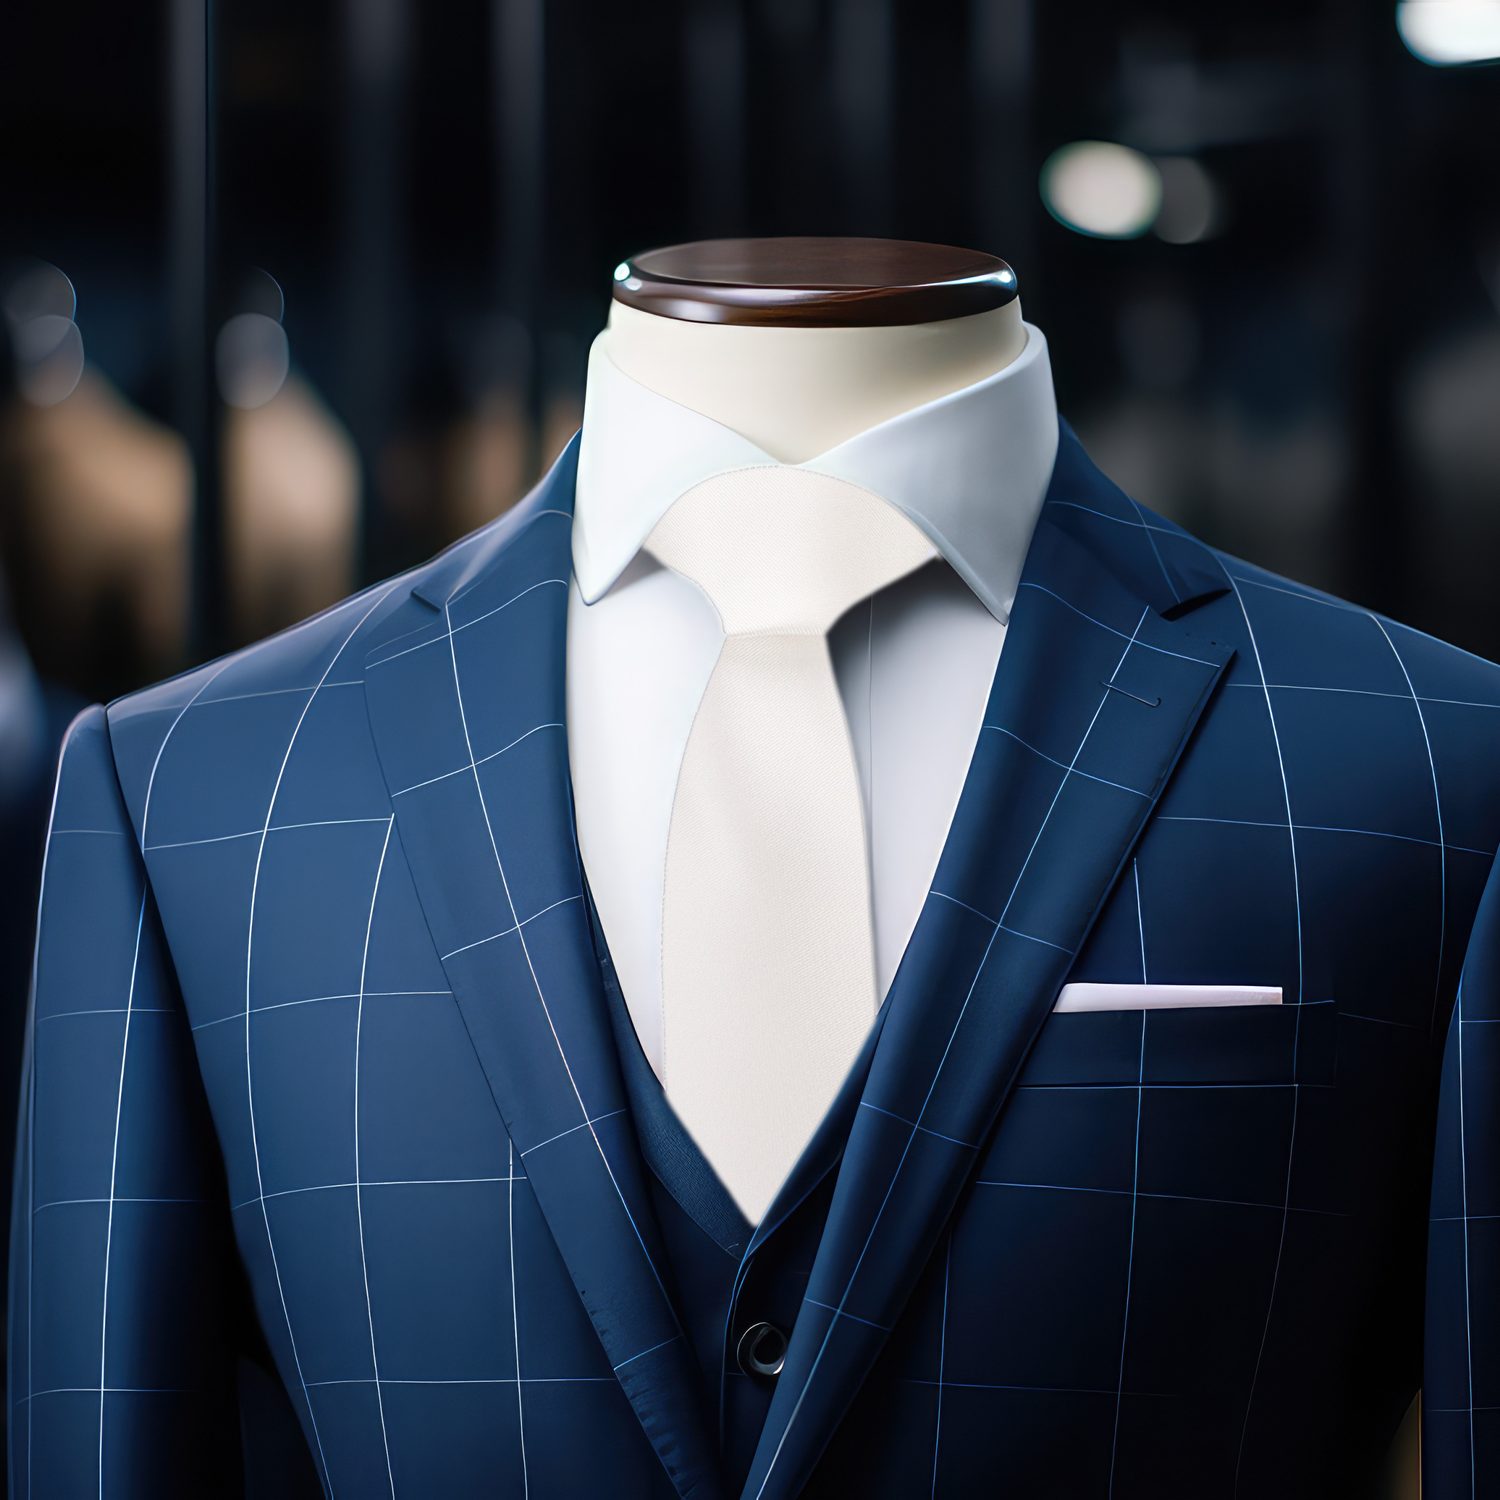 Ivory White Necktie on Blue Suit